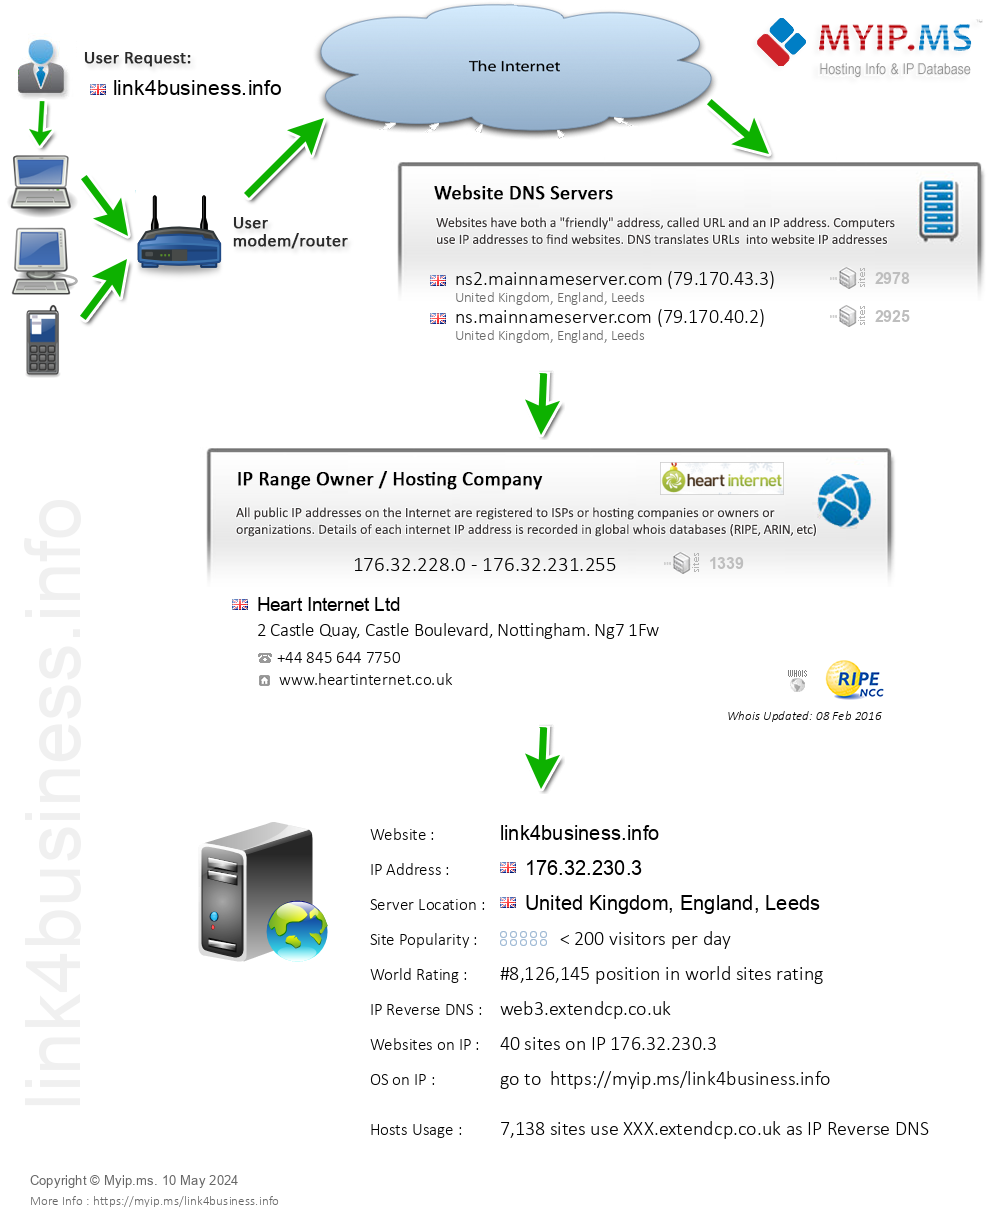 Link4business.info - Website Hosting Visual IP Diagram